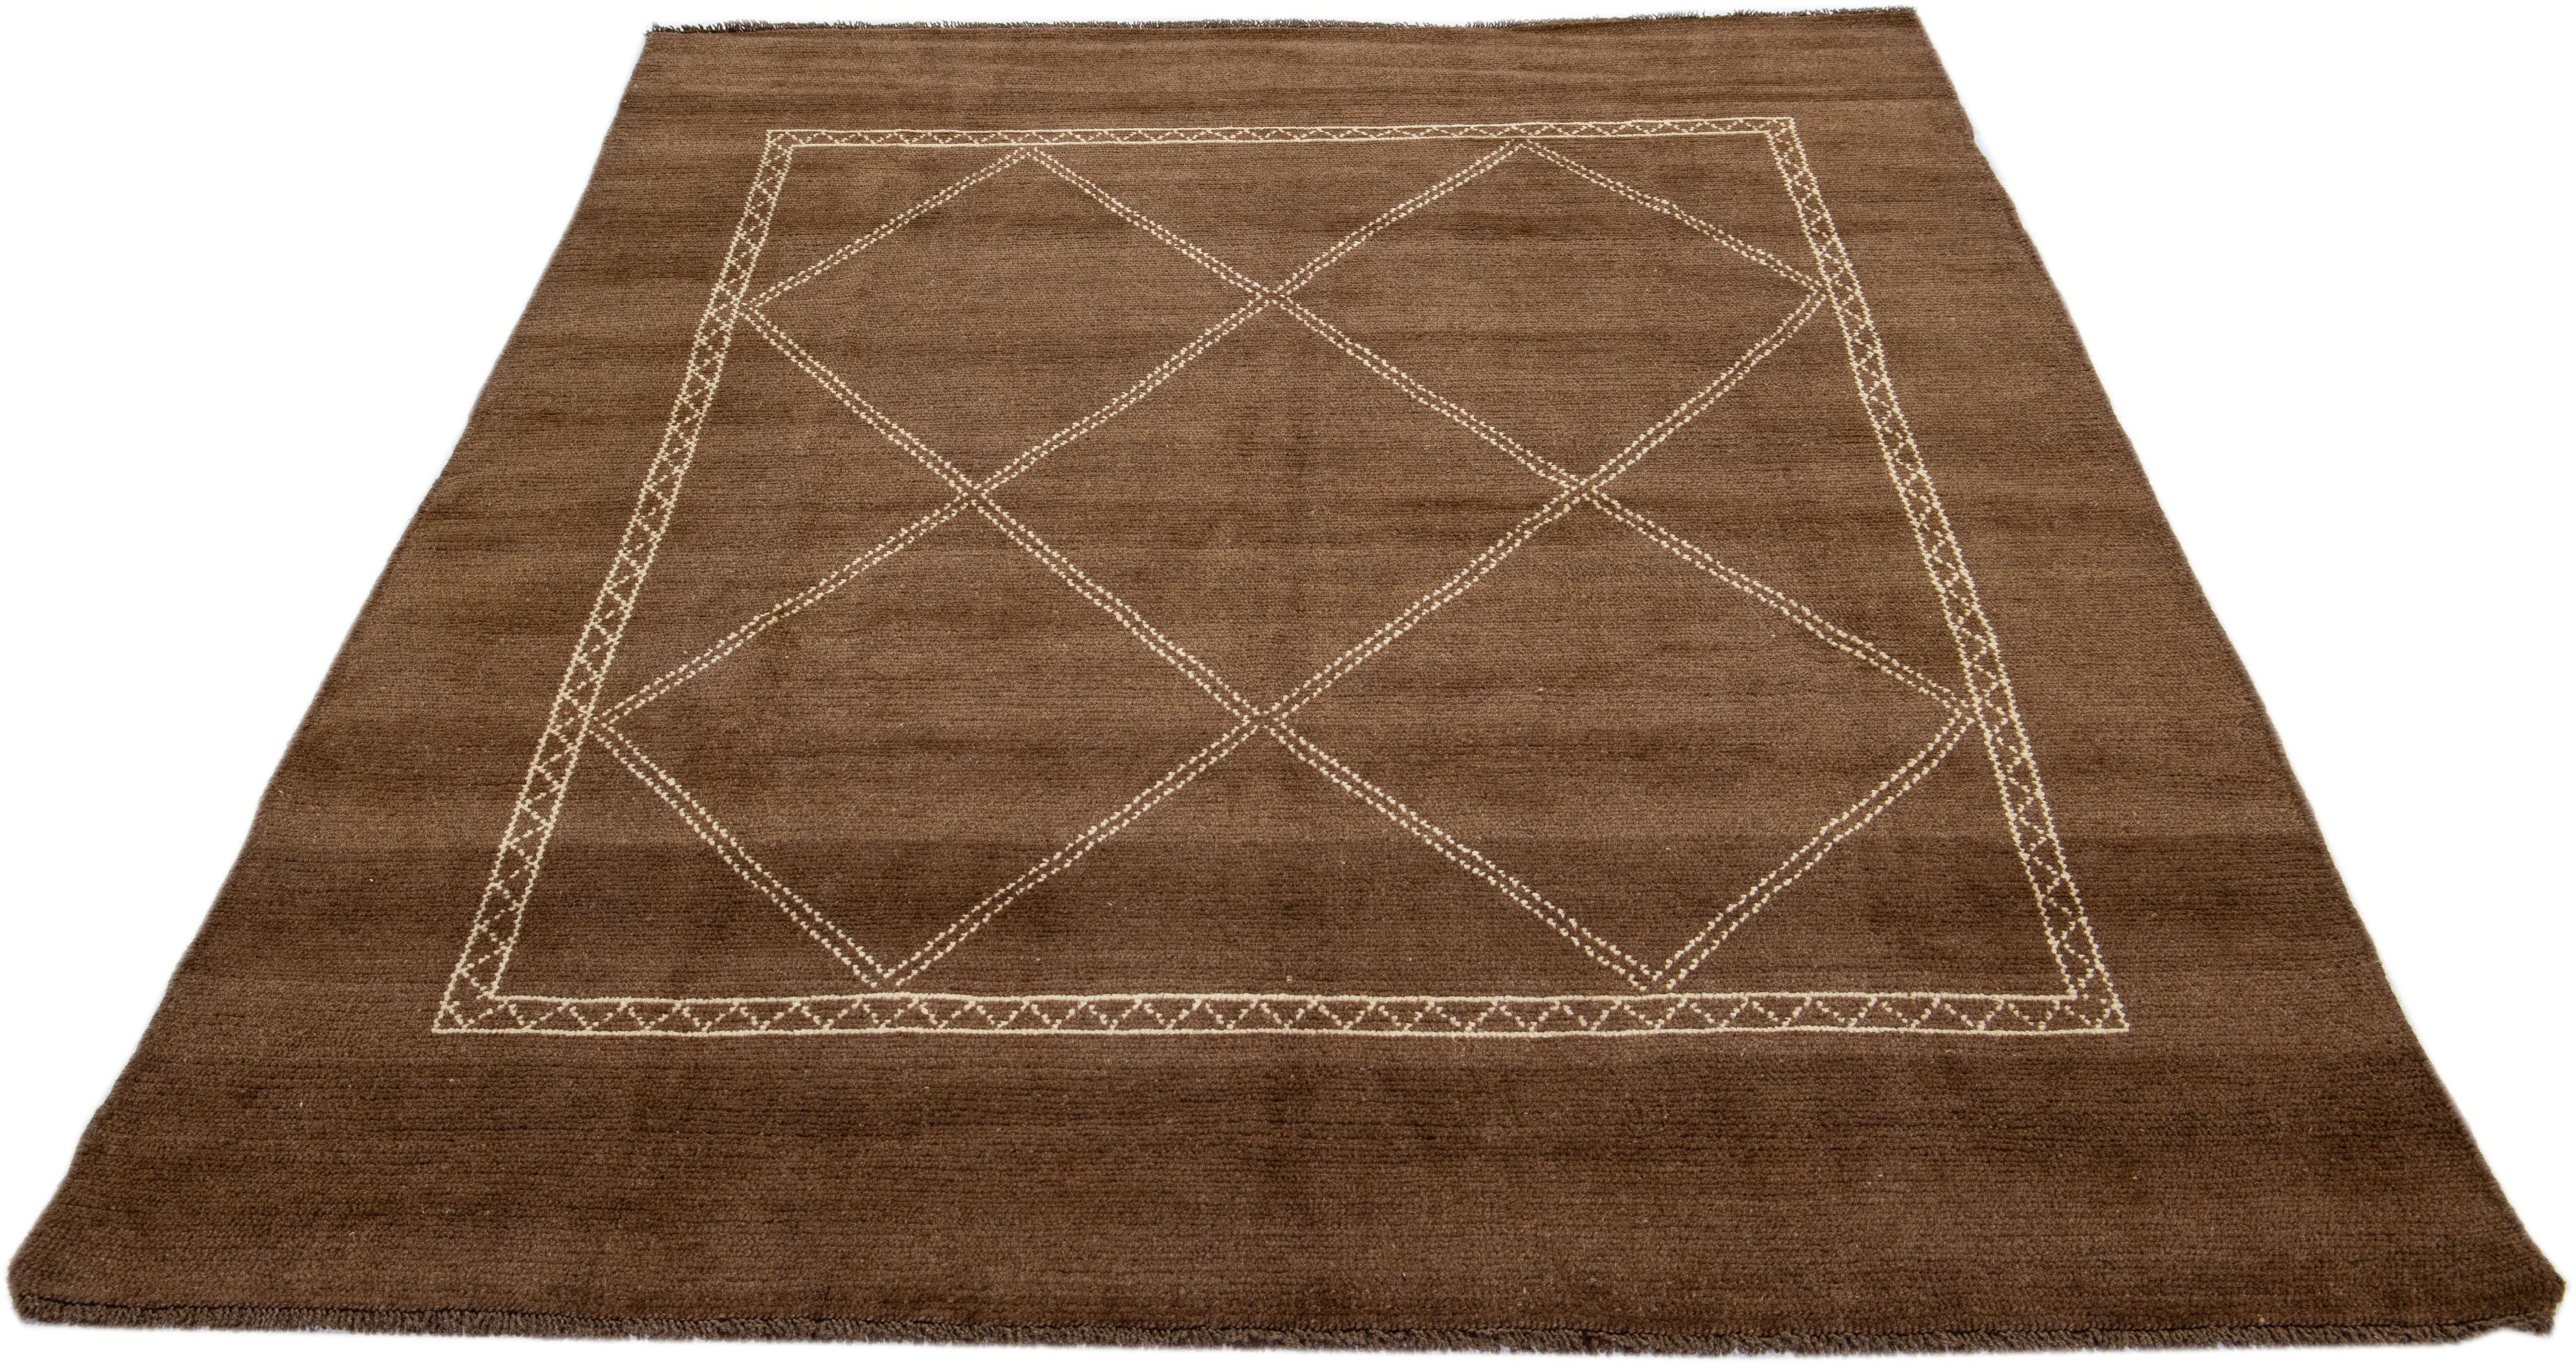 Tribal Modern Moroccan Style Handmade Brown Wool Rug by Apadana For Sale 1